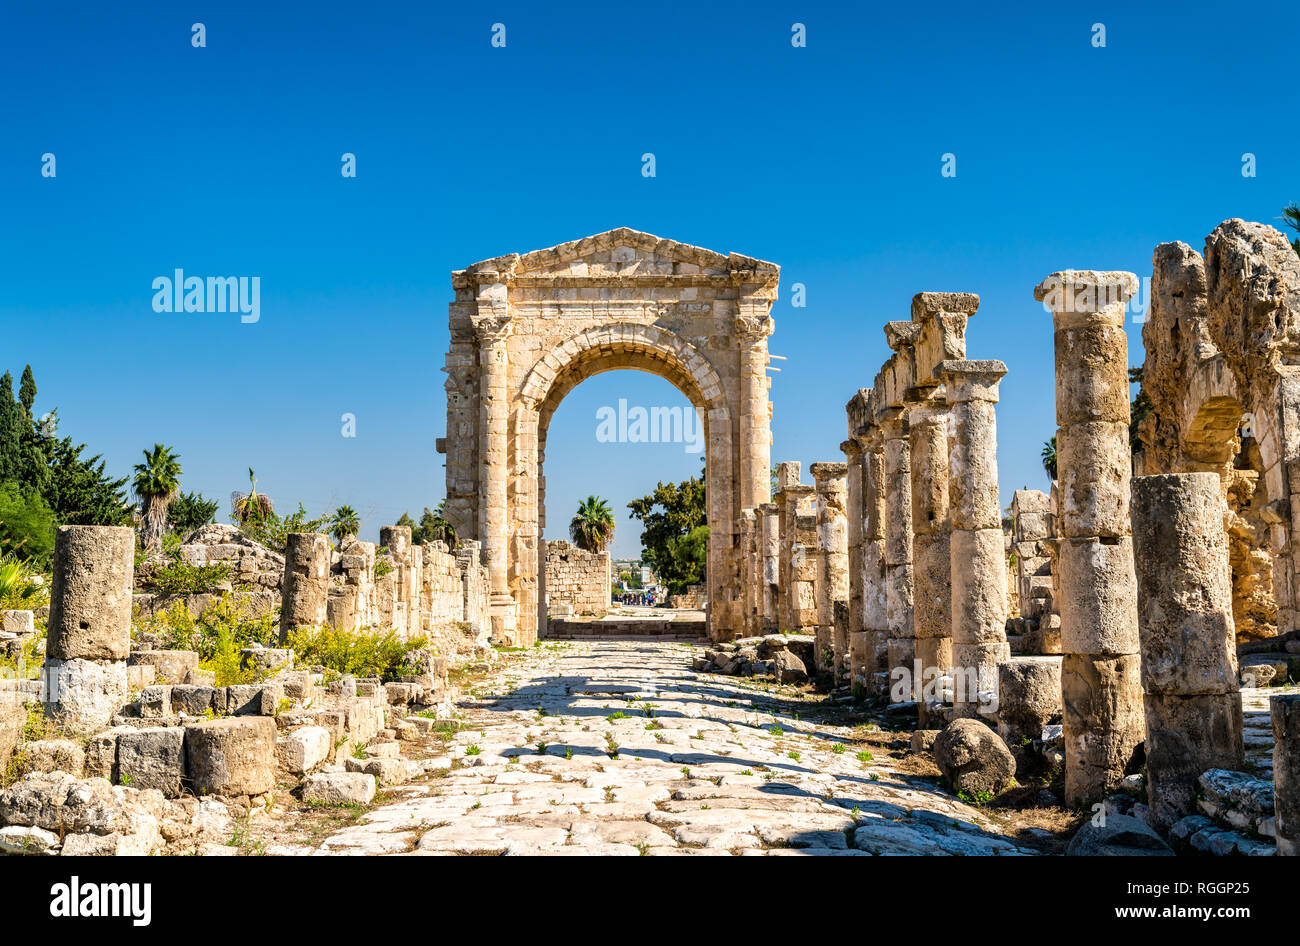 Arch of Hadrian at the Al-Bass Tyre necropolis in Lebanon Stock Photo